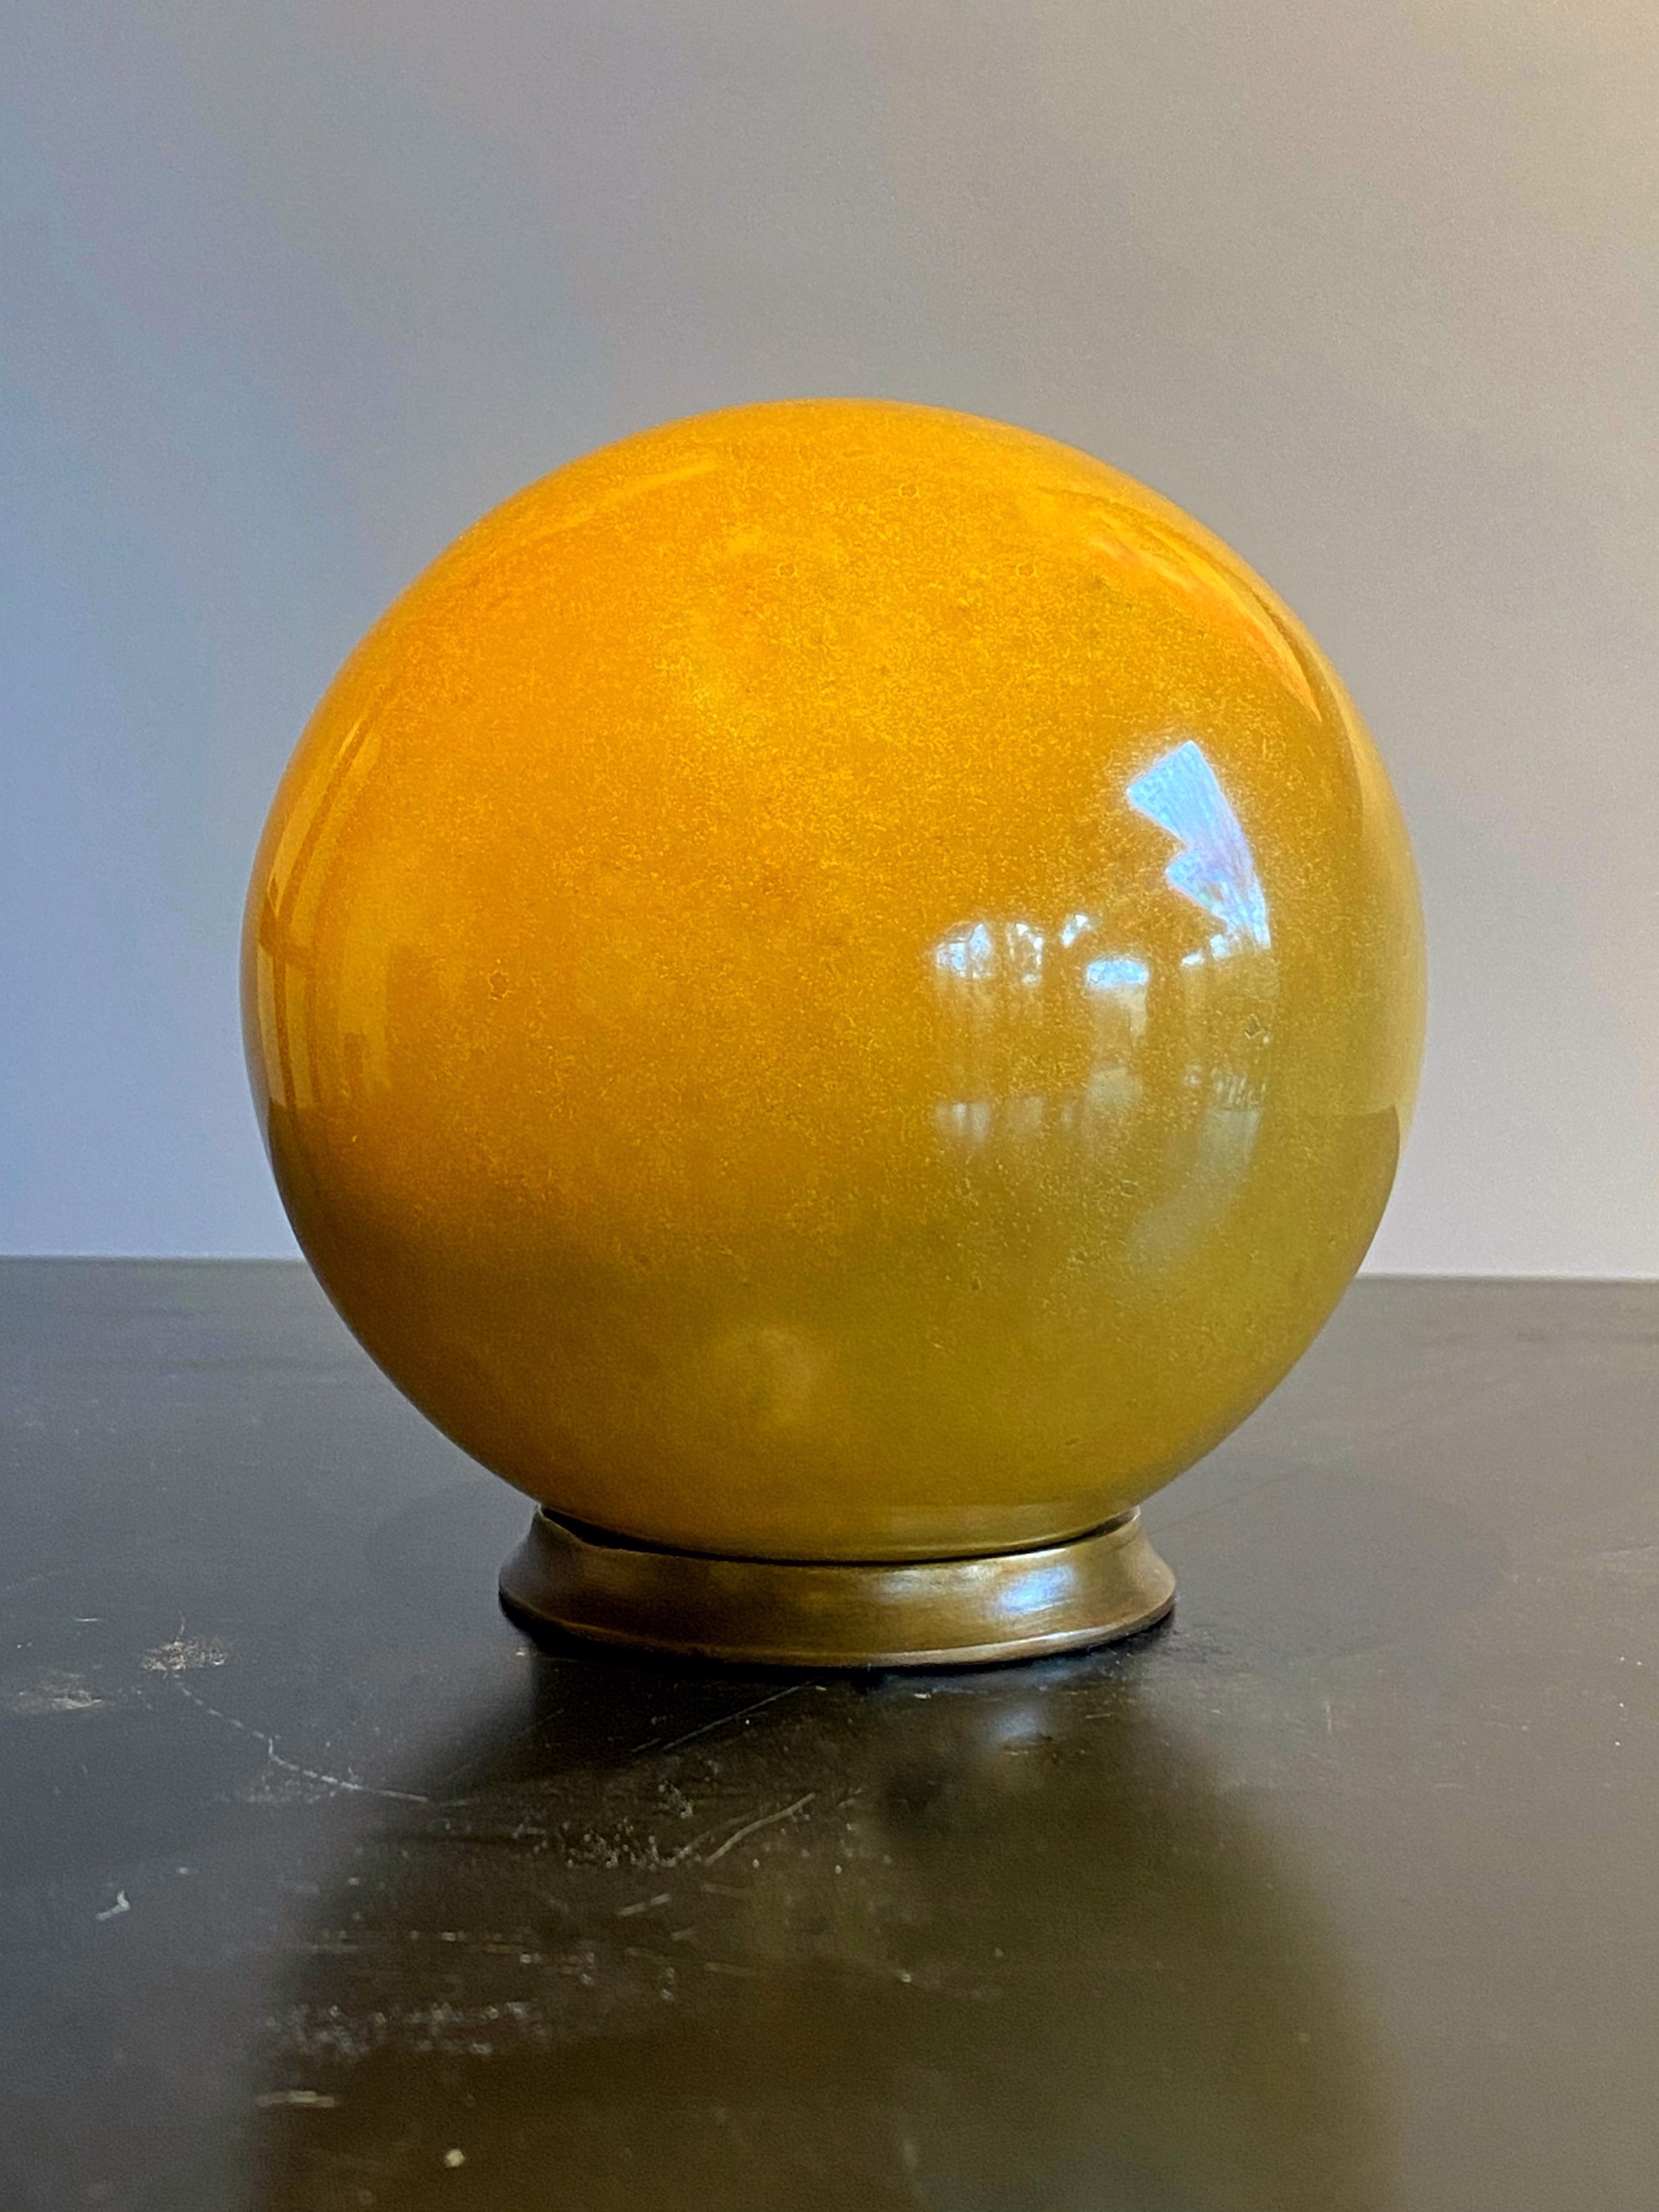 Earth Sphere #1 by Bruce Gardner